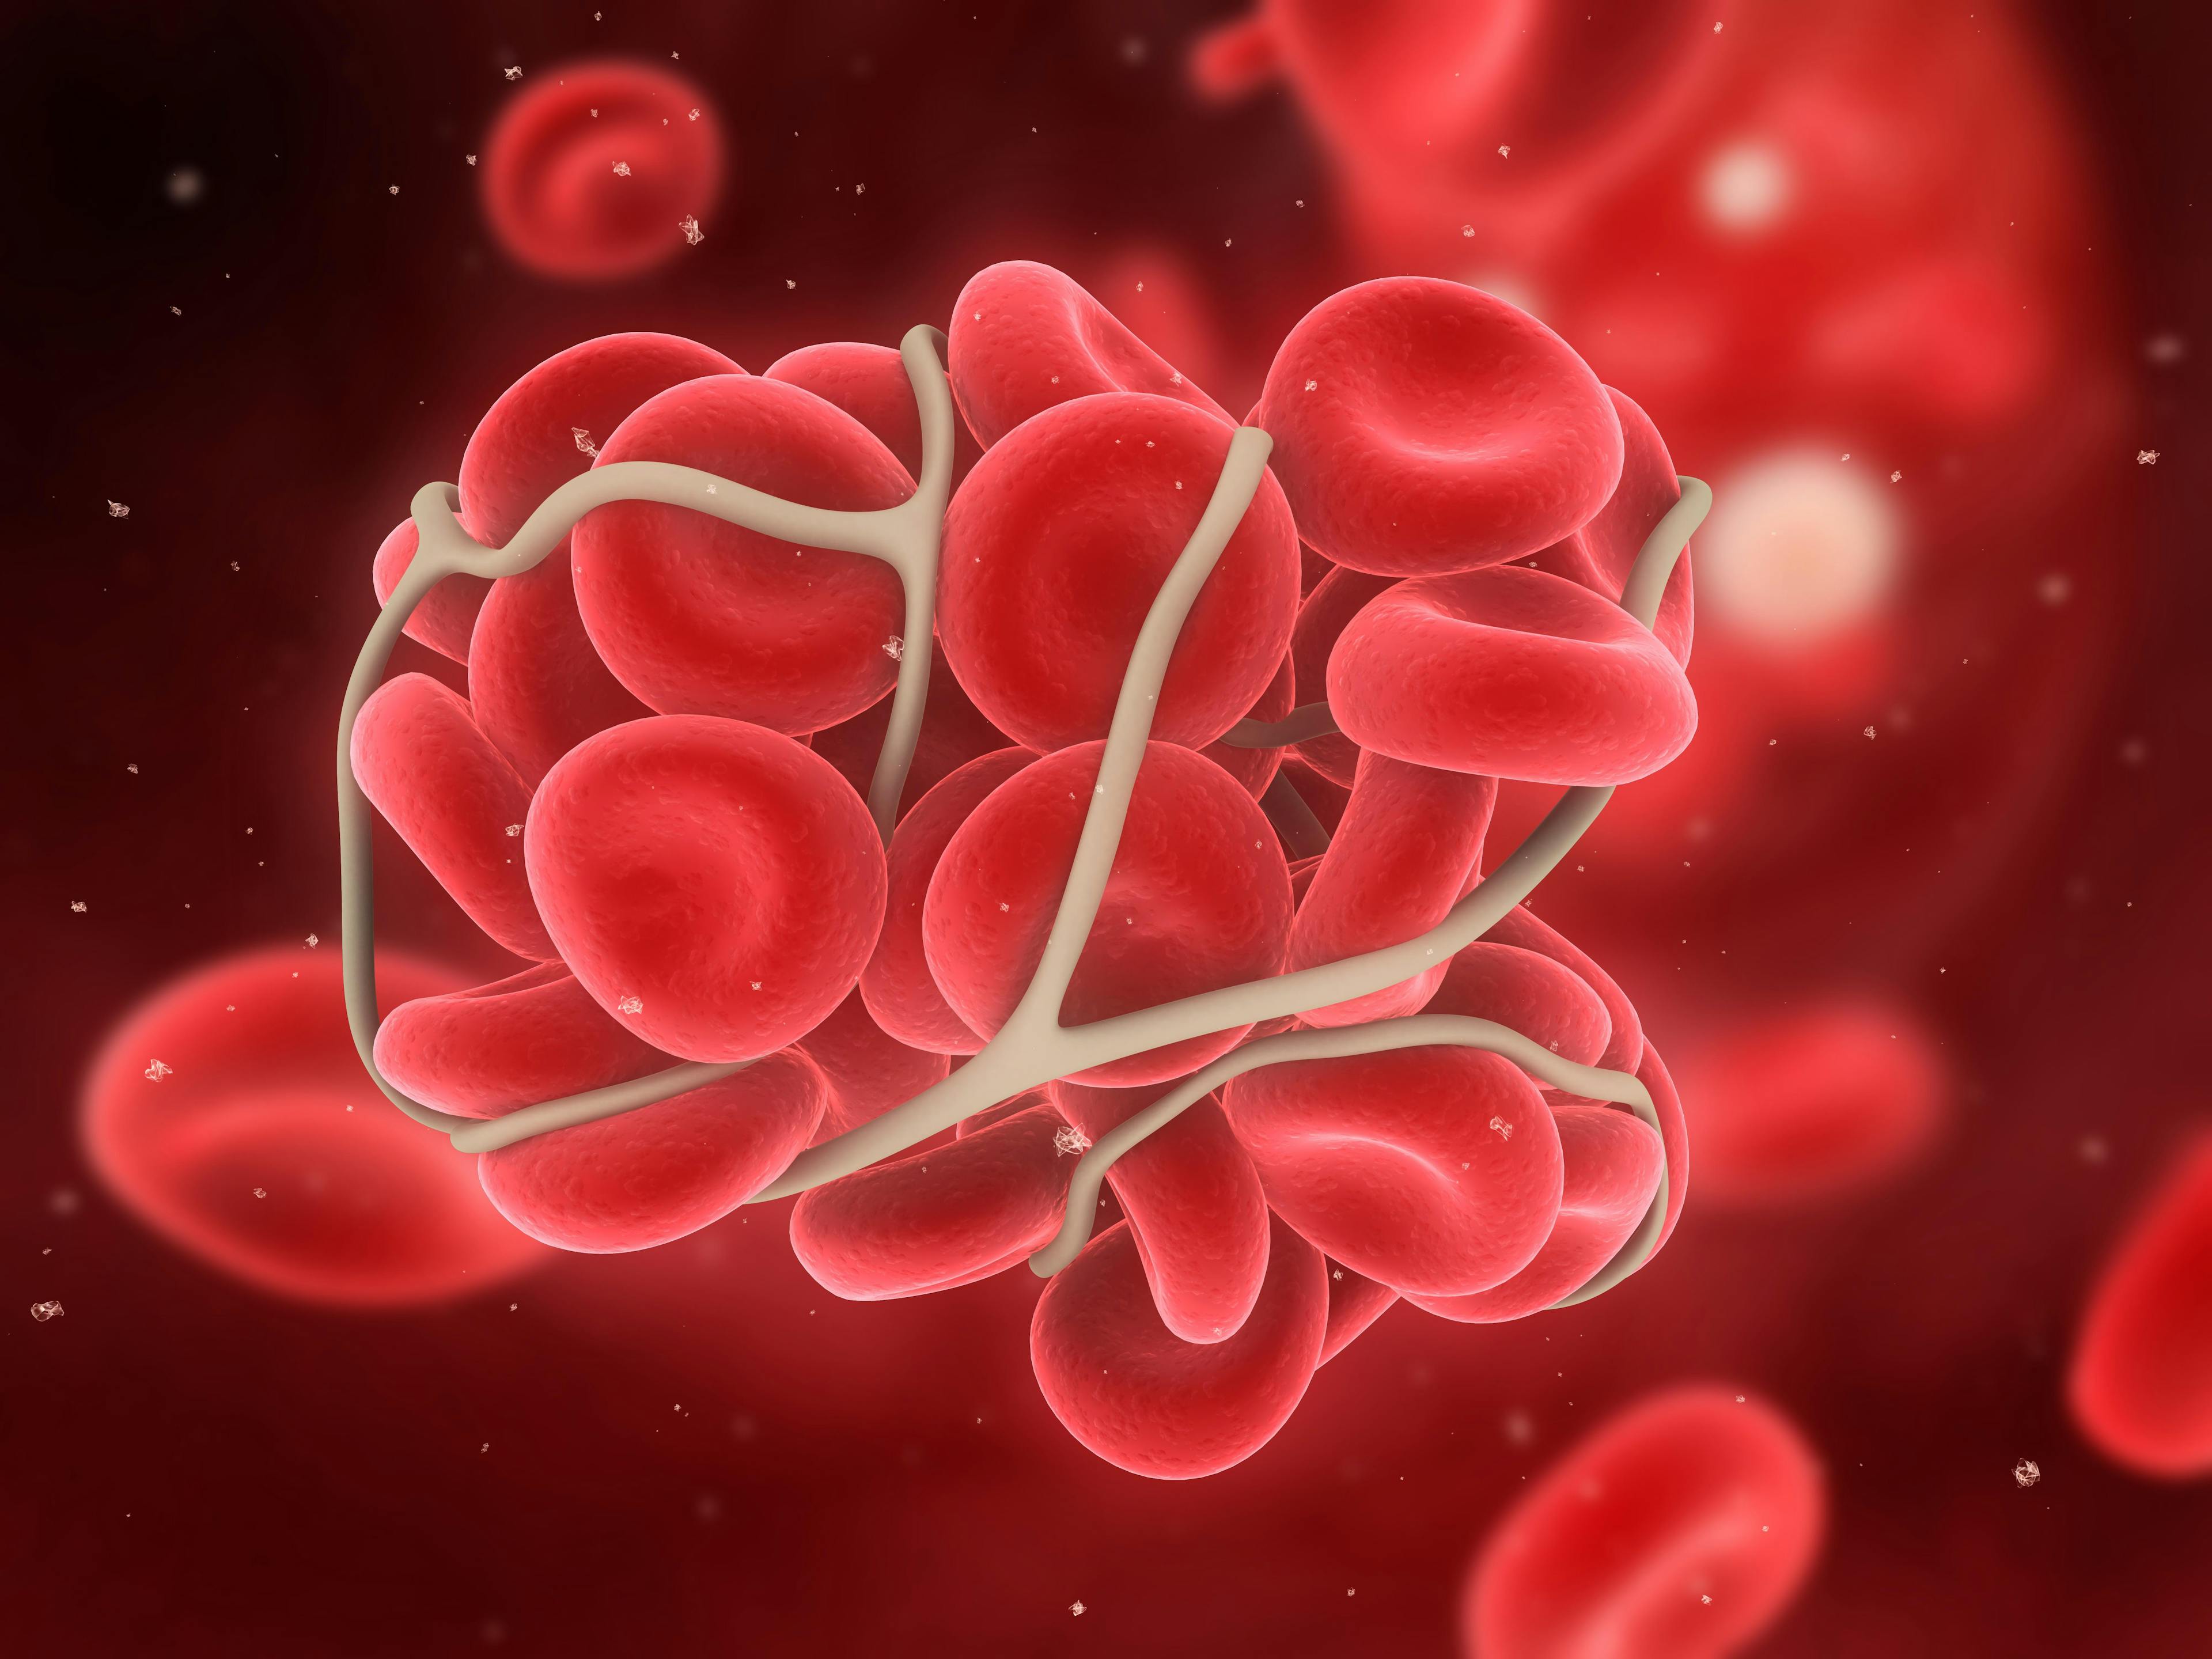 Digital illustration of a blood clot